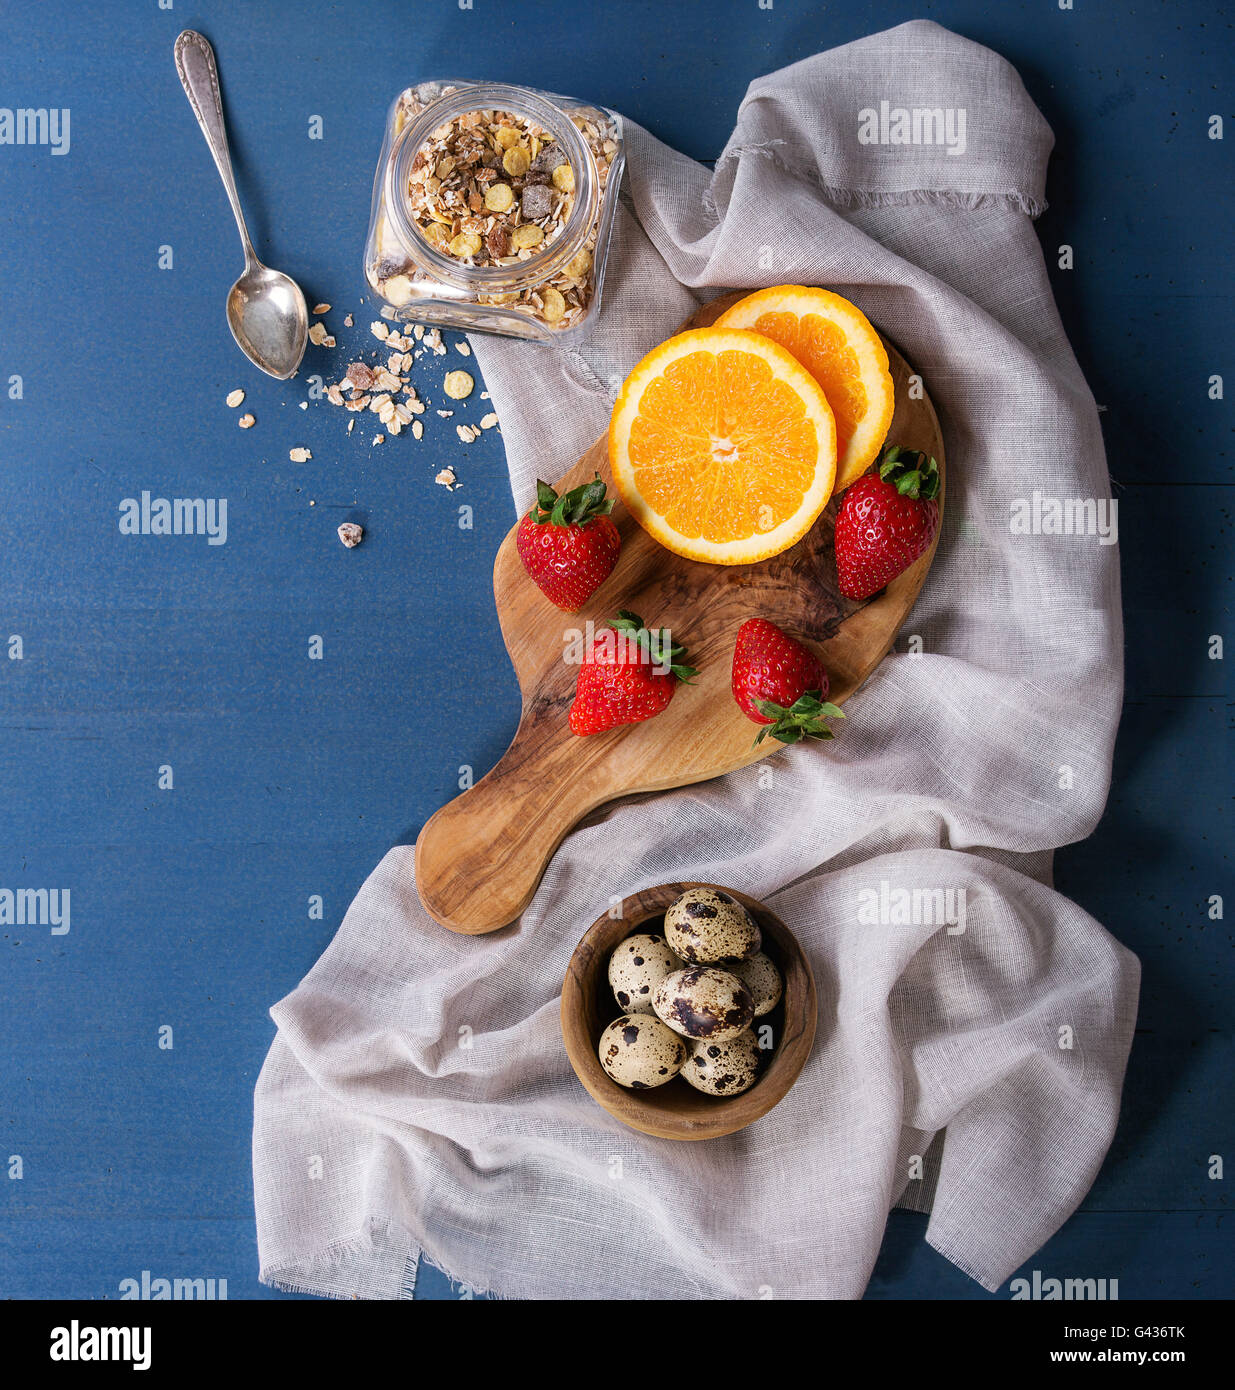 Ingredients for healthy breakfast. Quail eggs, jar of muesli, fresh orange and strawberries on olive wood chopping board with te Stock Photo